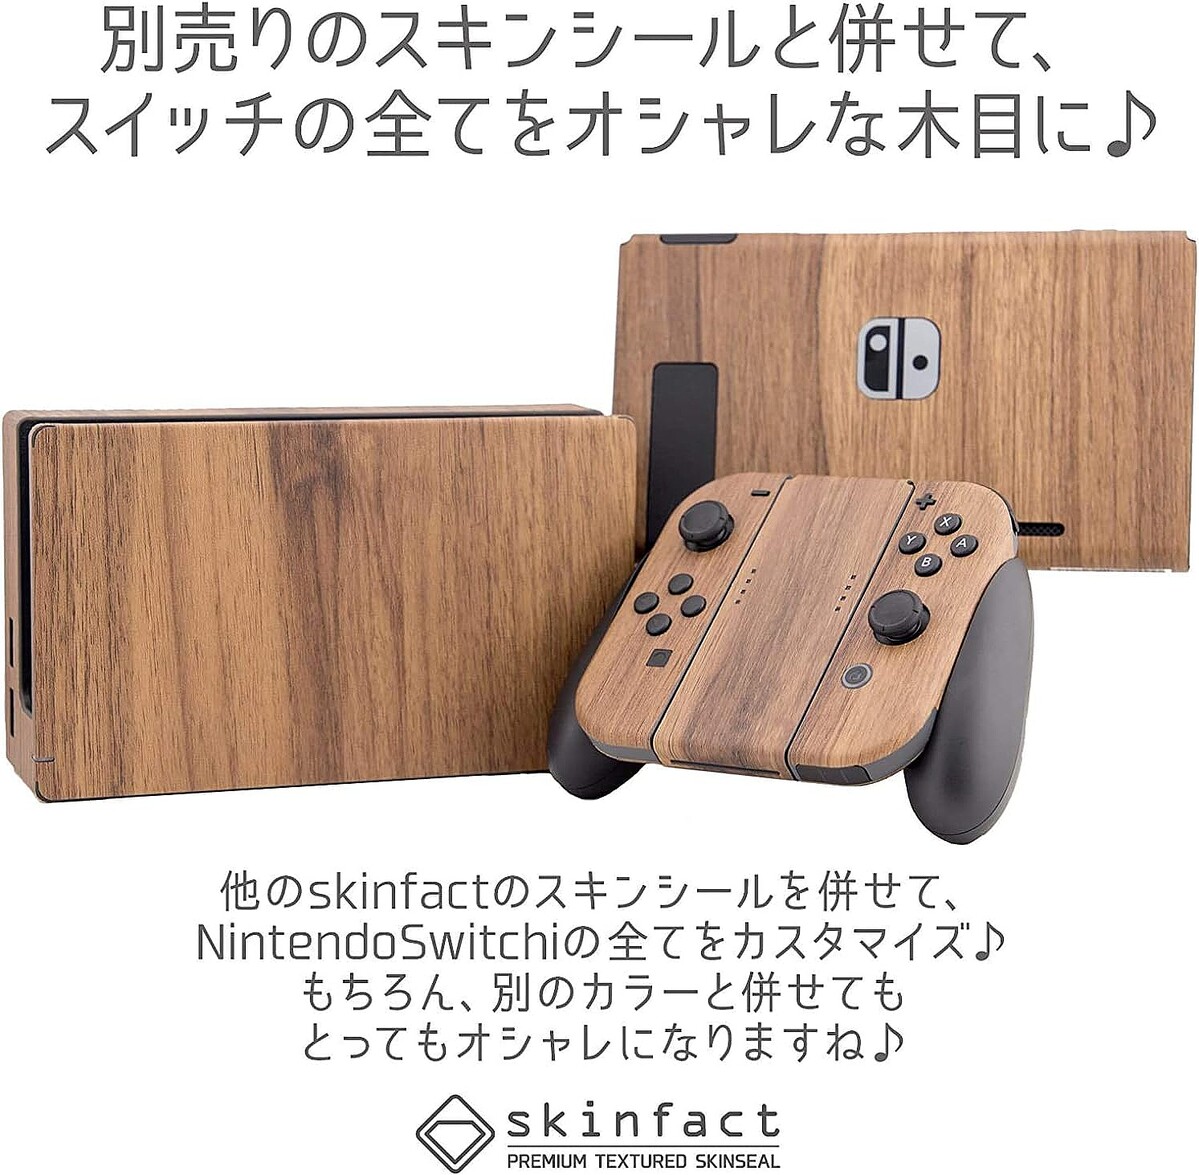 Nintendo Switchが木目調に!?スキンシールで手軽にアレンジ可能です。